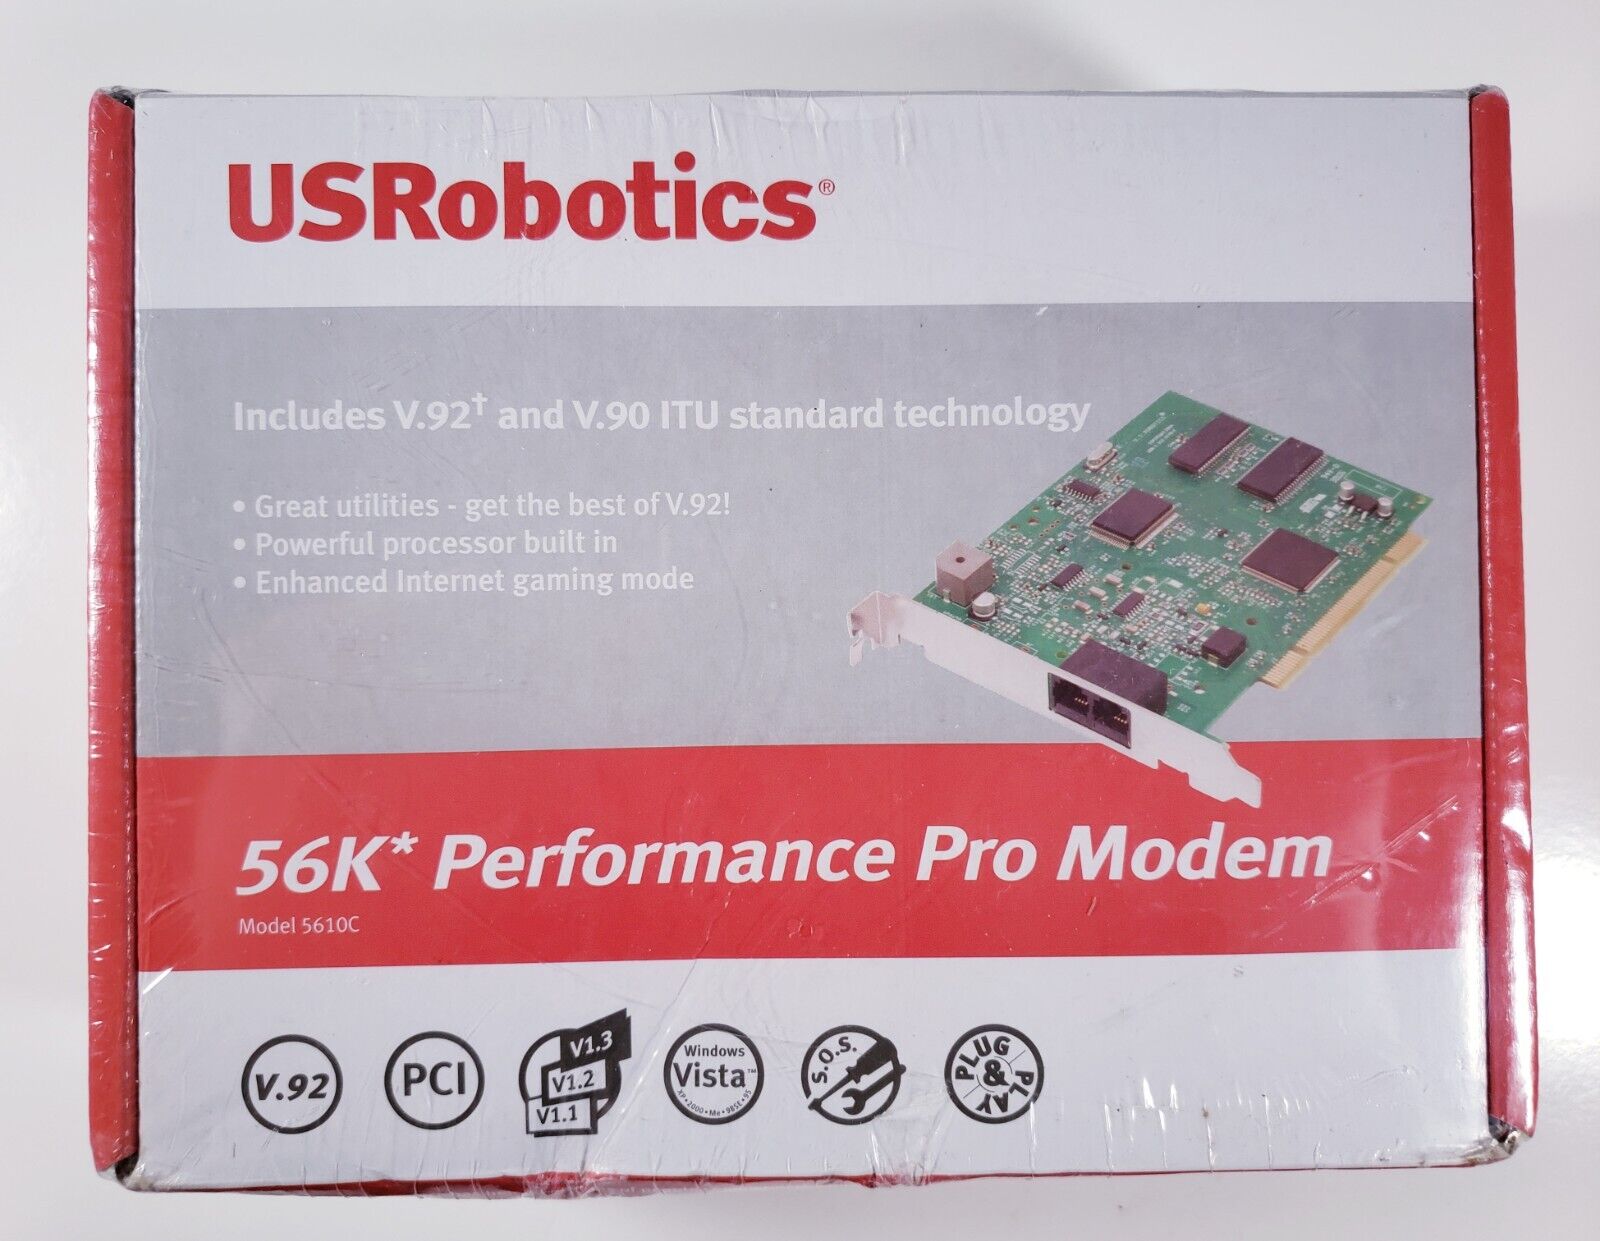 Usrobotics 56k Performance Pro Modem [model 5610c] - Brand New Sealed